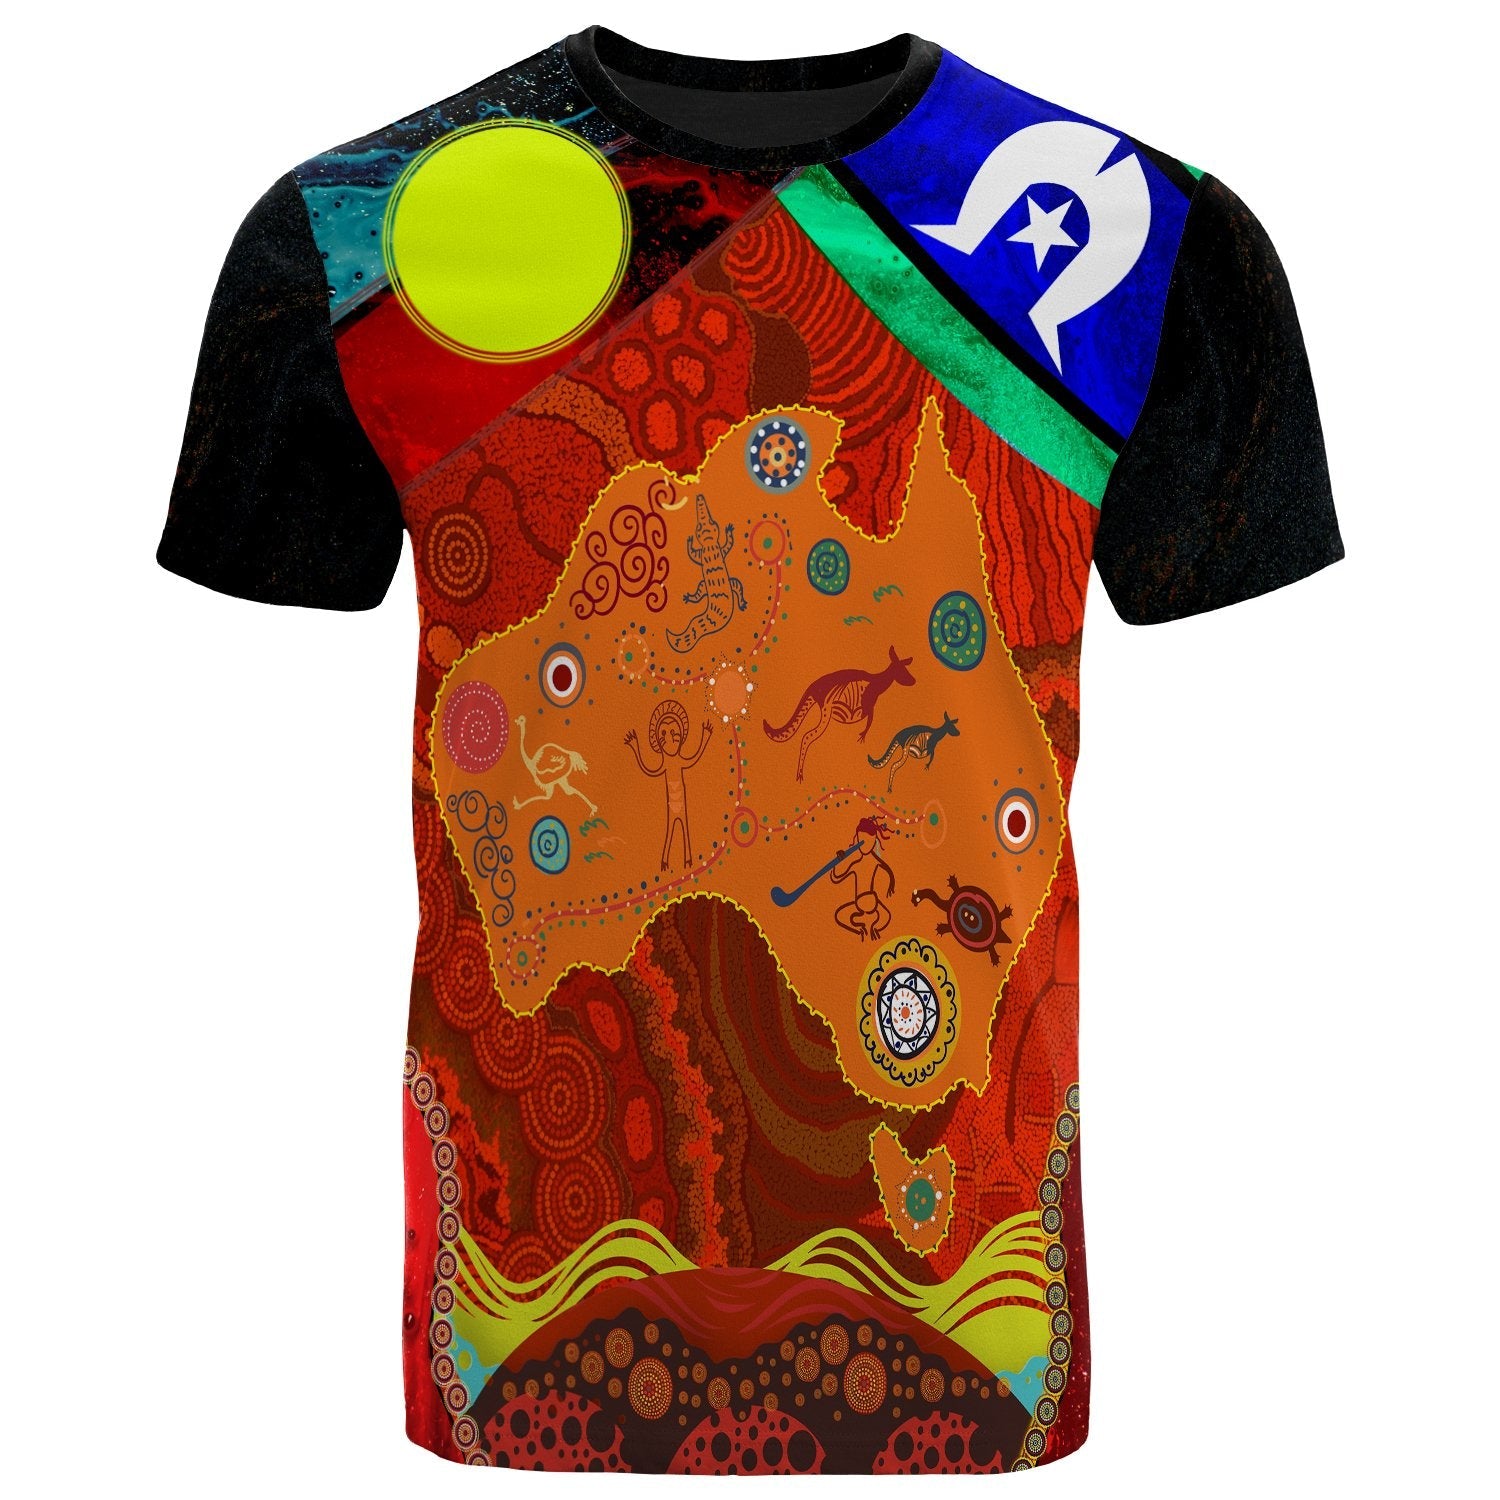 aboriginal-t-shirt-naidoc-week-2020-version-red